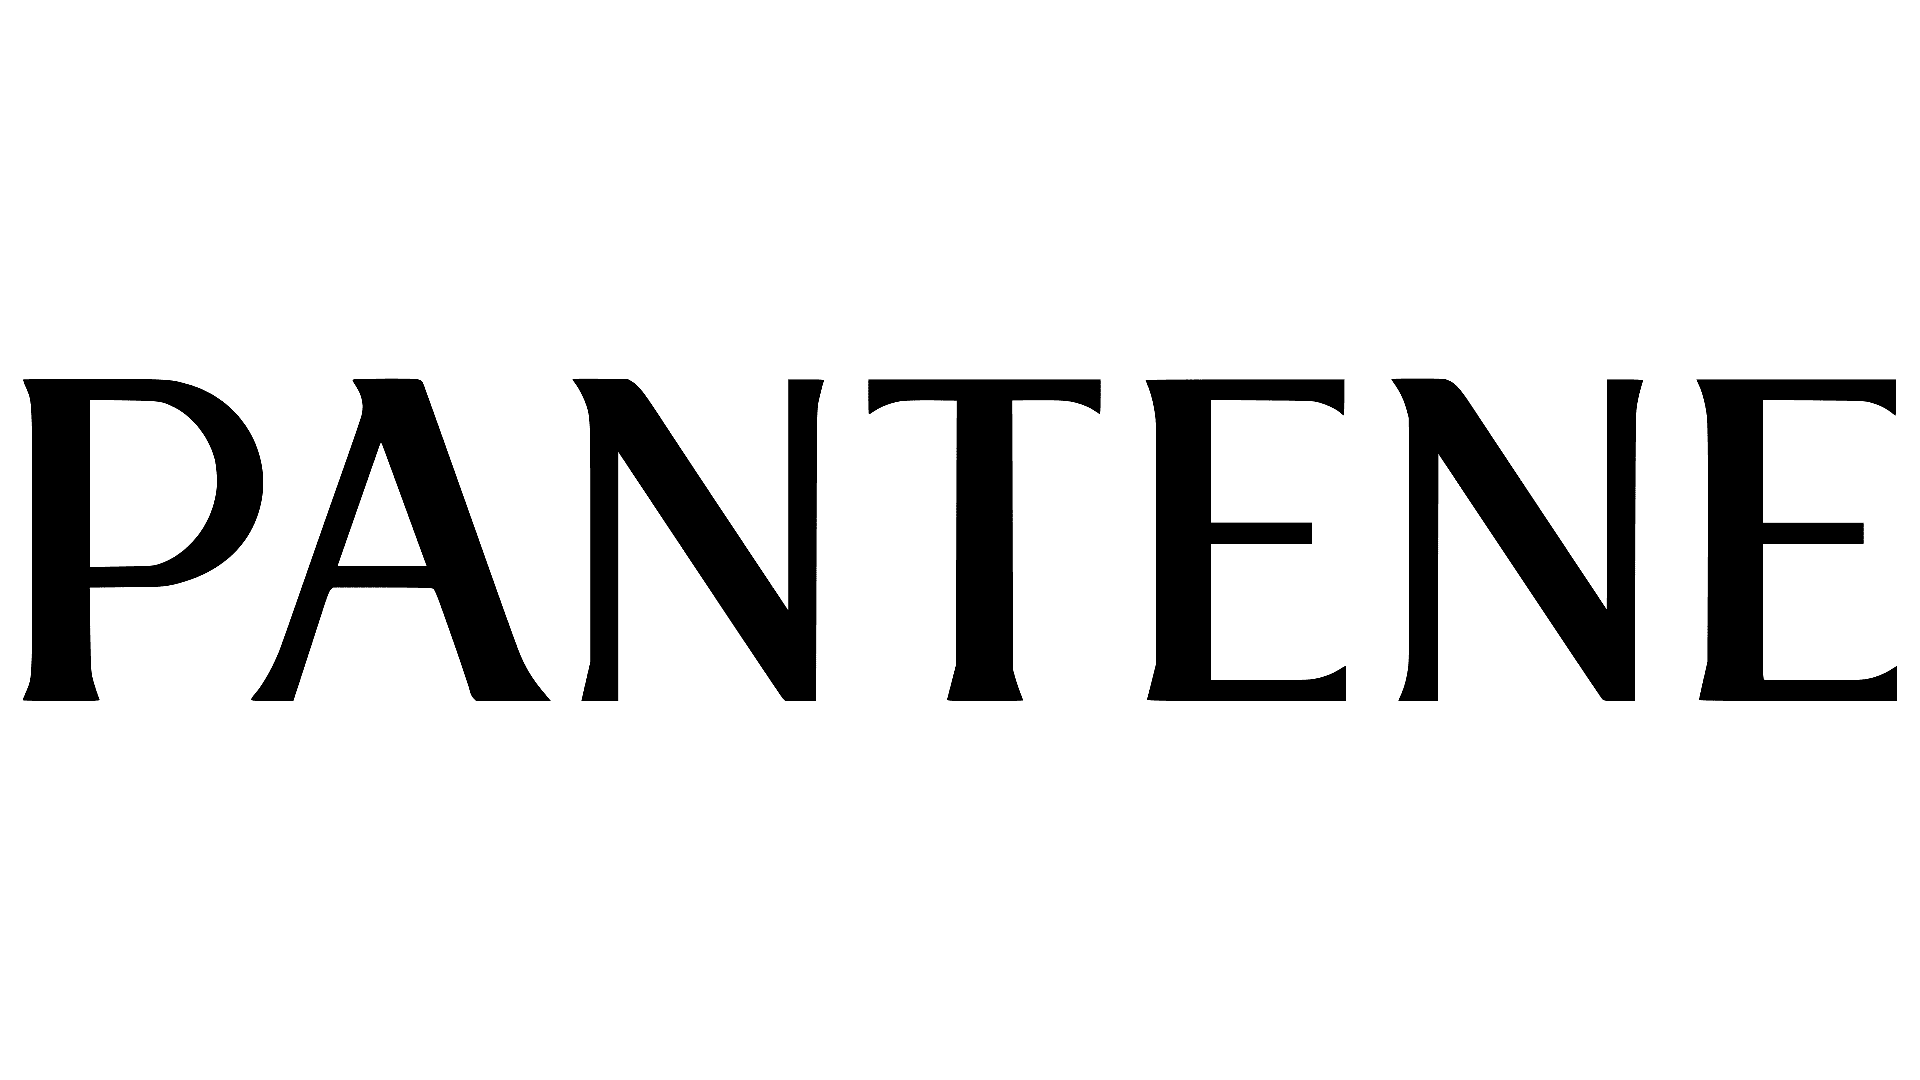 Brand: Pantene